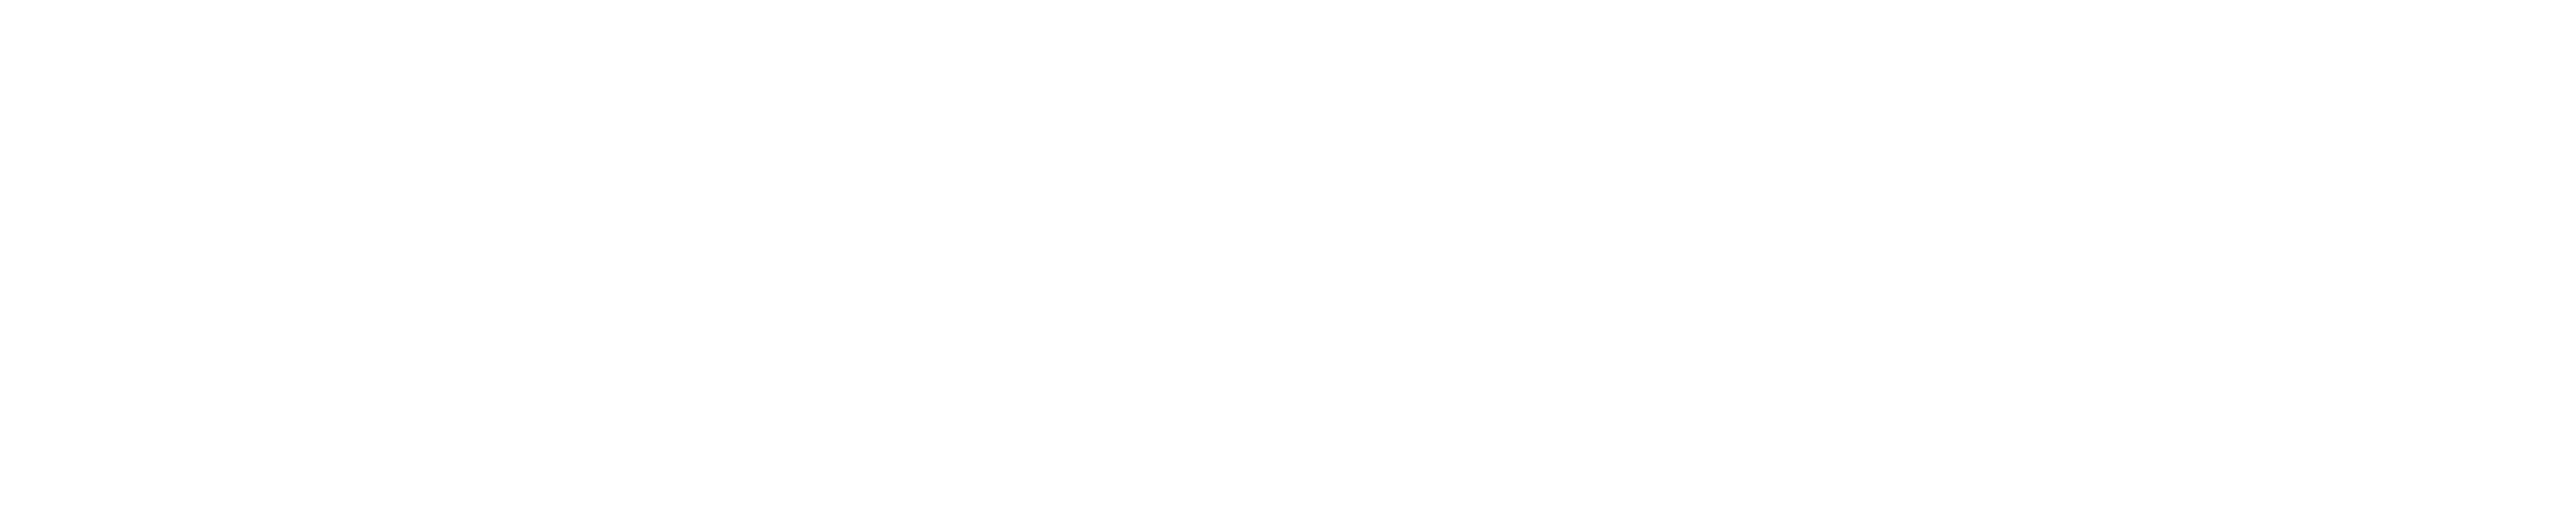 Pittsburgh Social Sciences Seminar Tracker